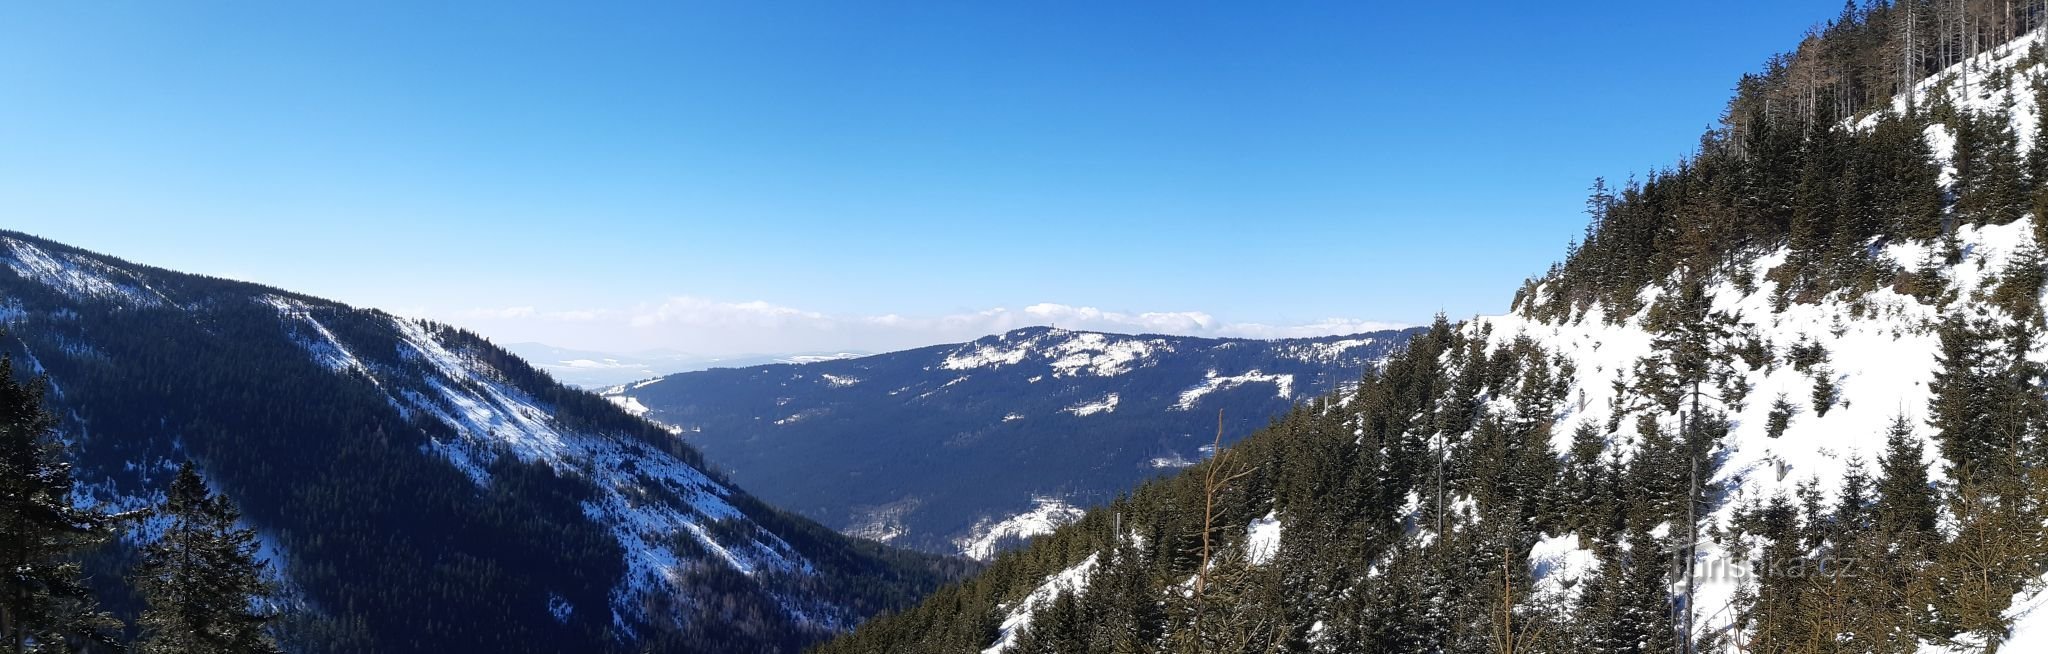 Esqui cross-country de Slaměnka de volta a Dolní Morava